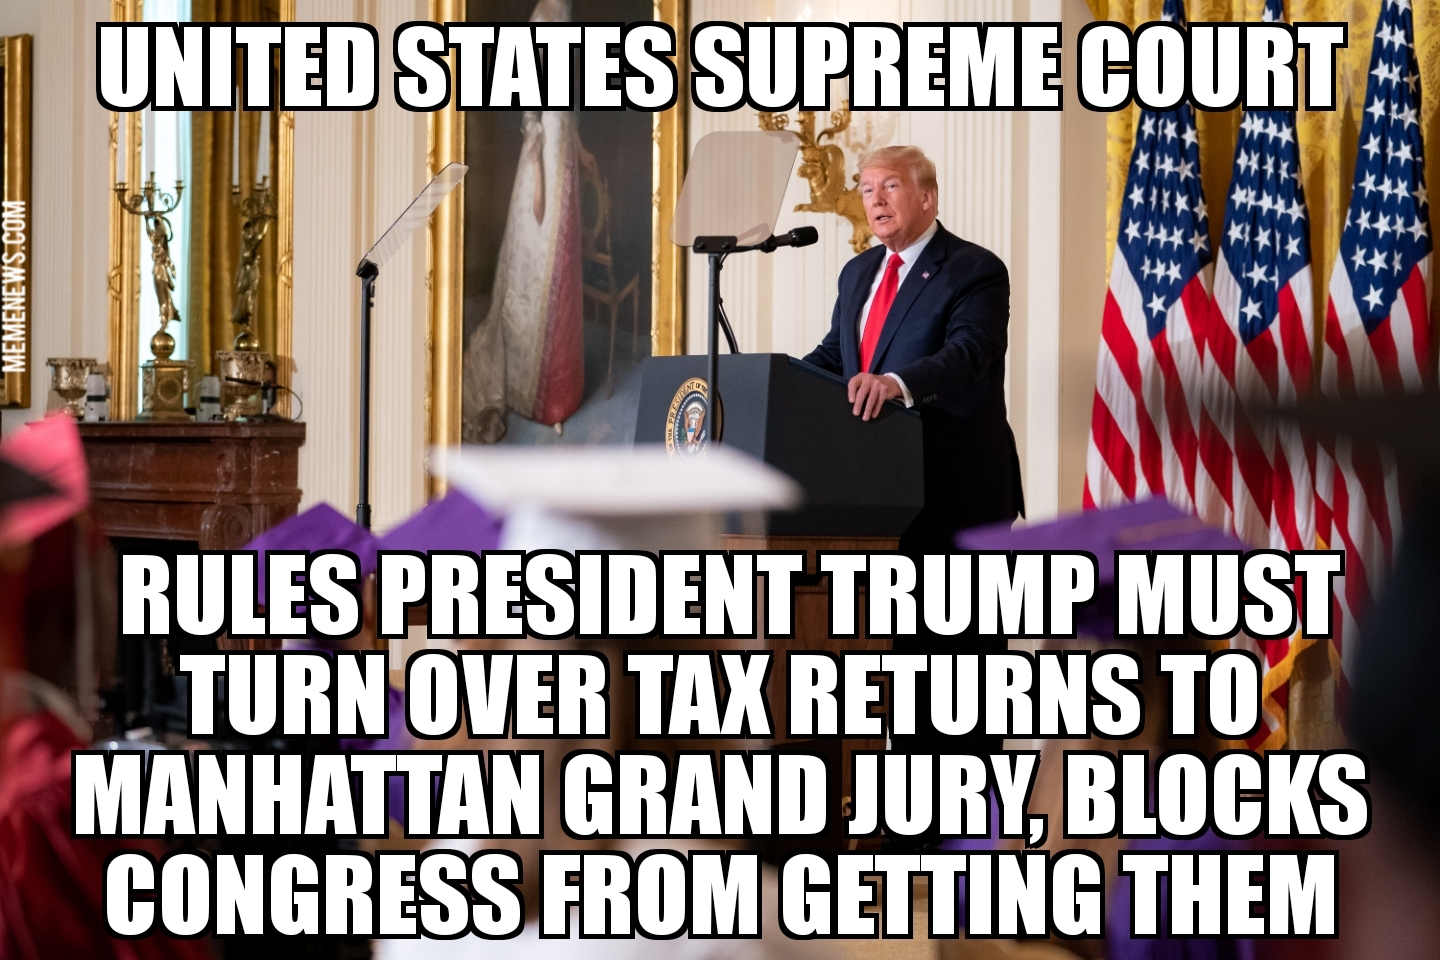 Supreme Court rules Trump must turn over tax returns, blocks Congress